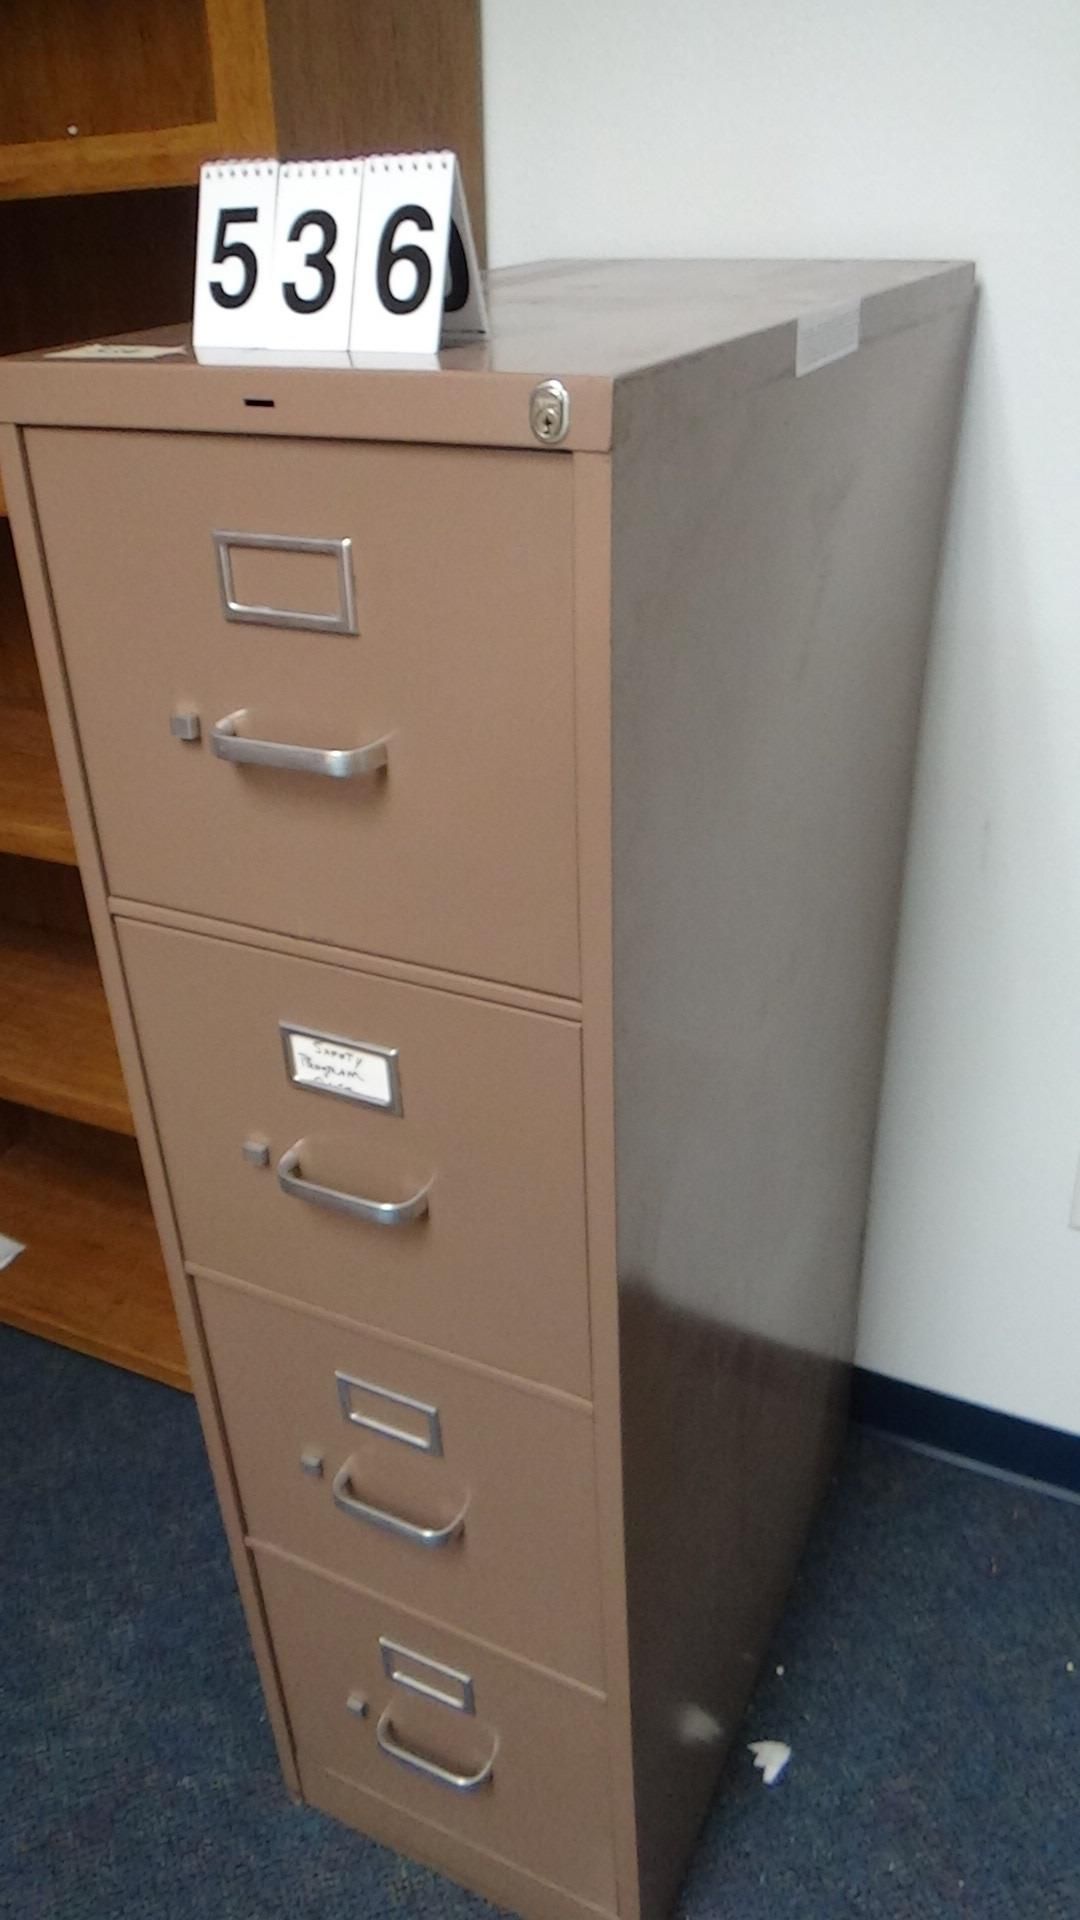 4 drawer file cabinet - Image 2 of 2